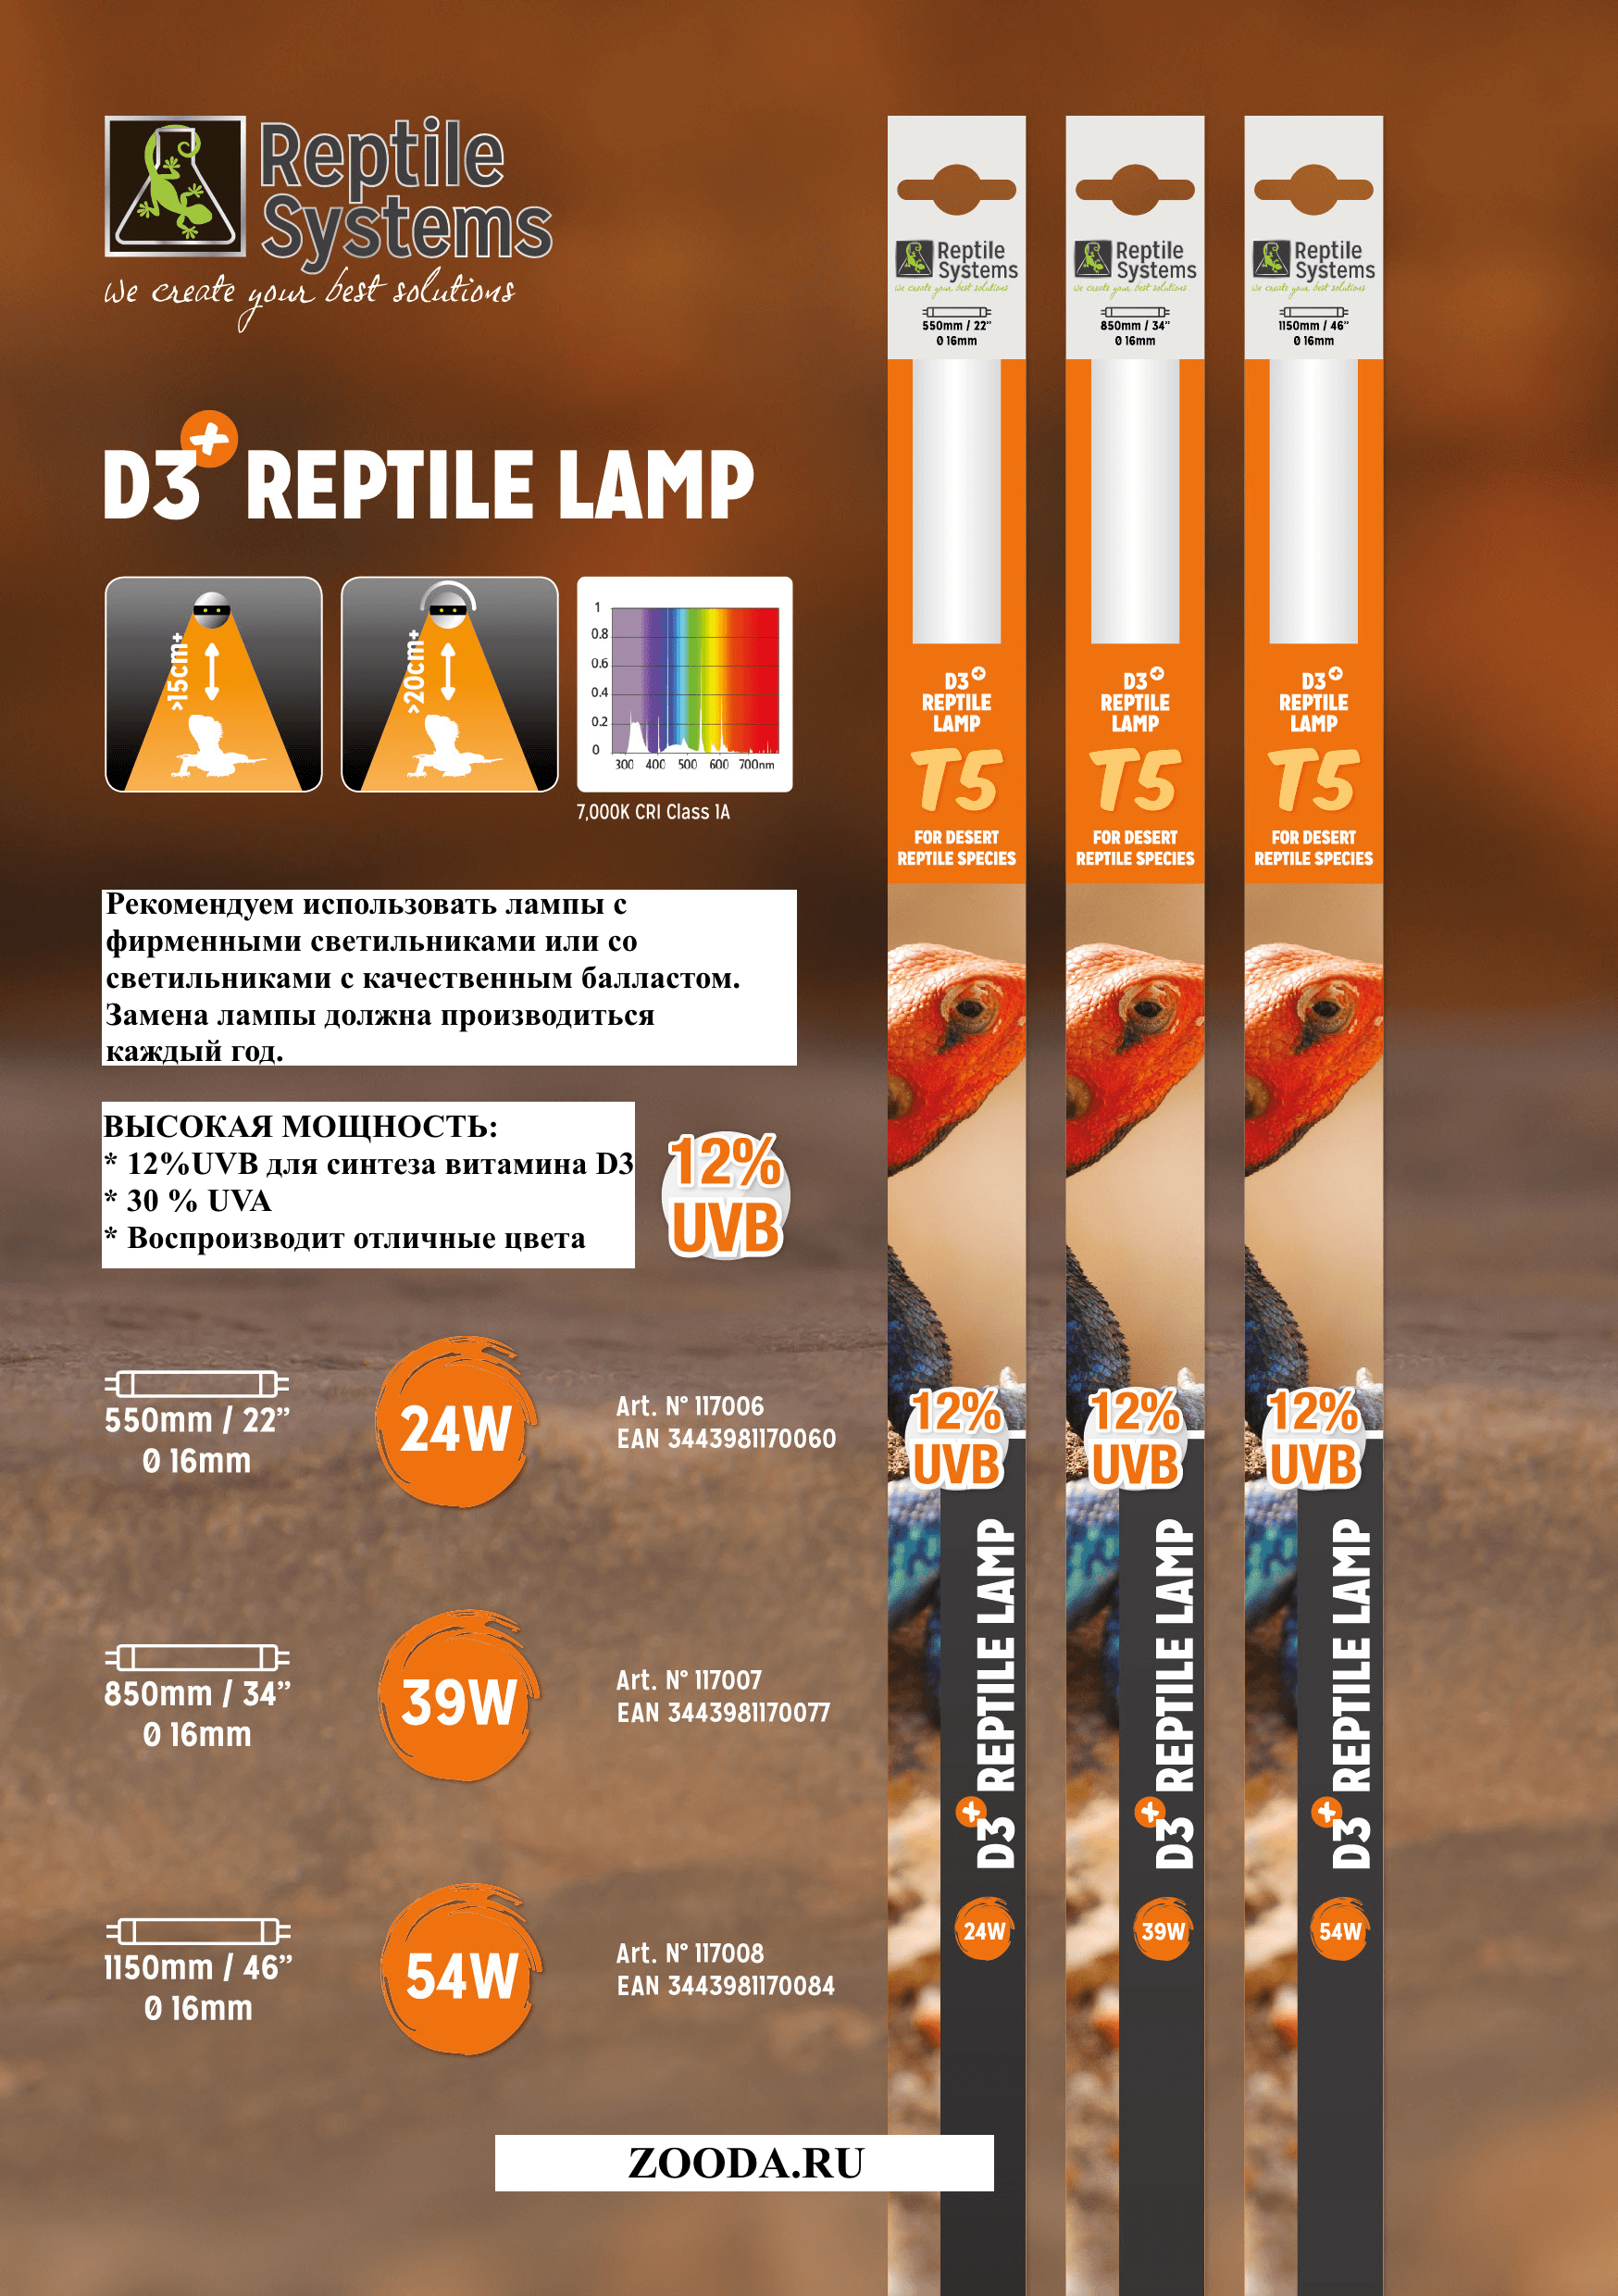 Reptile Systems D3+ Reptile Lamp T5 12%